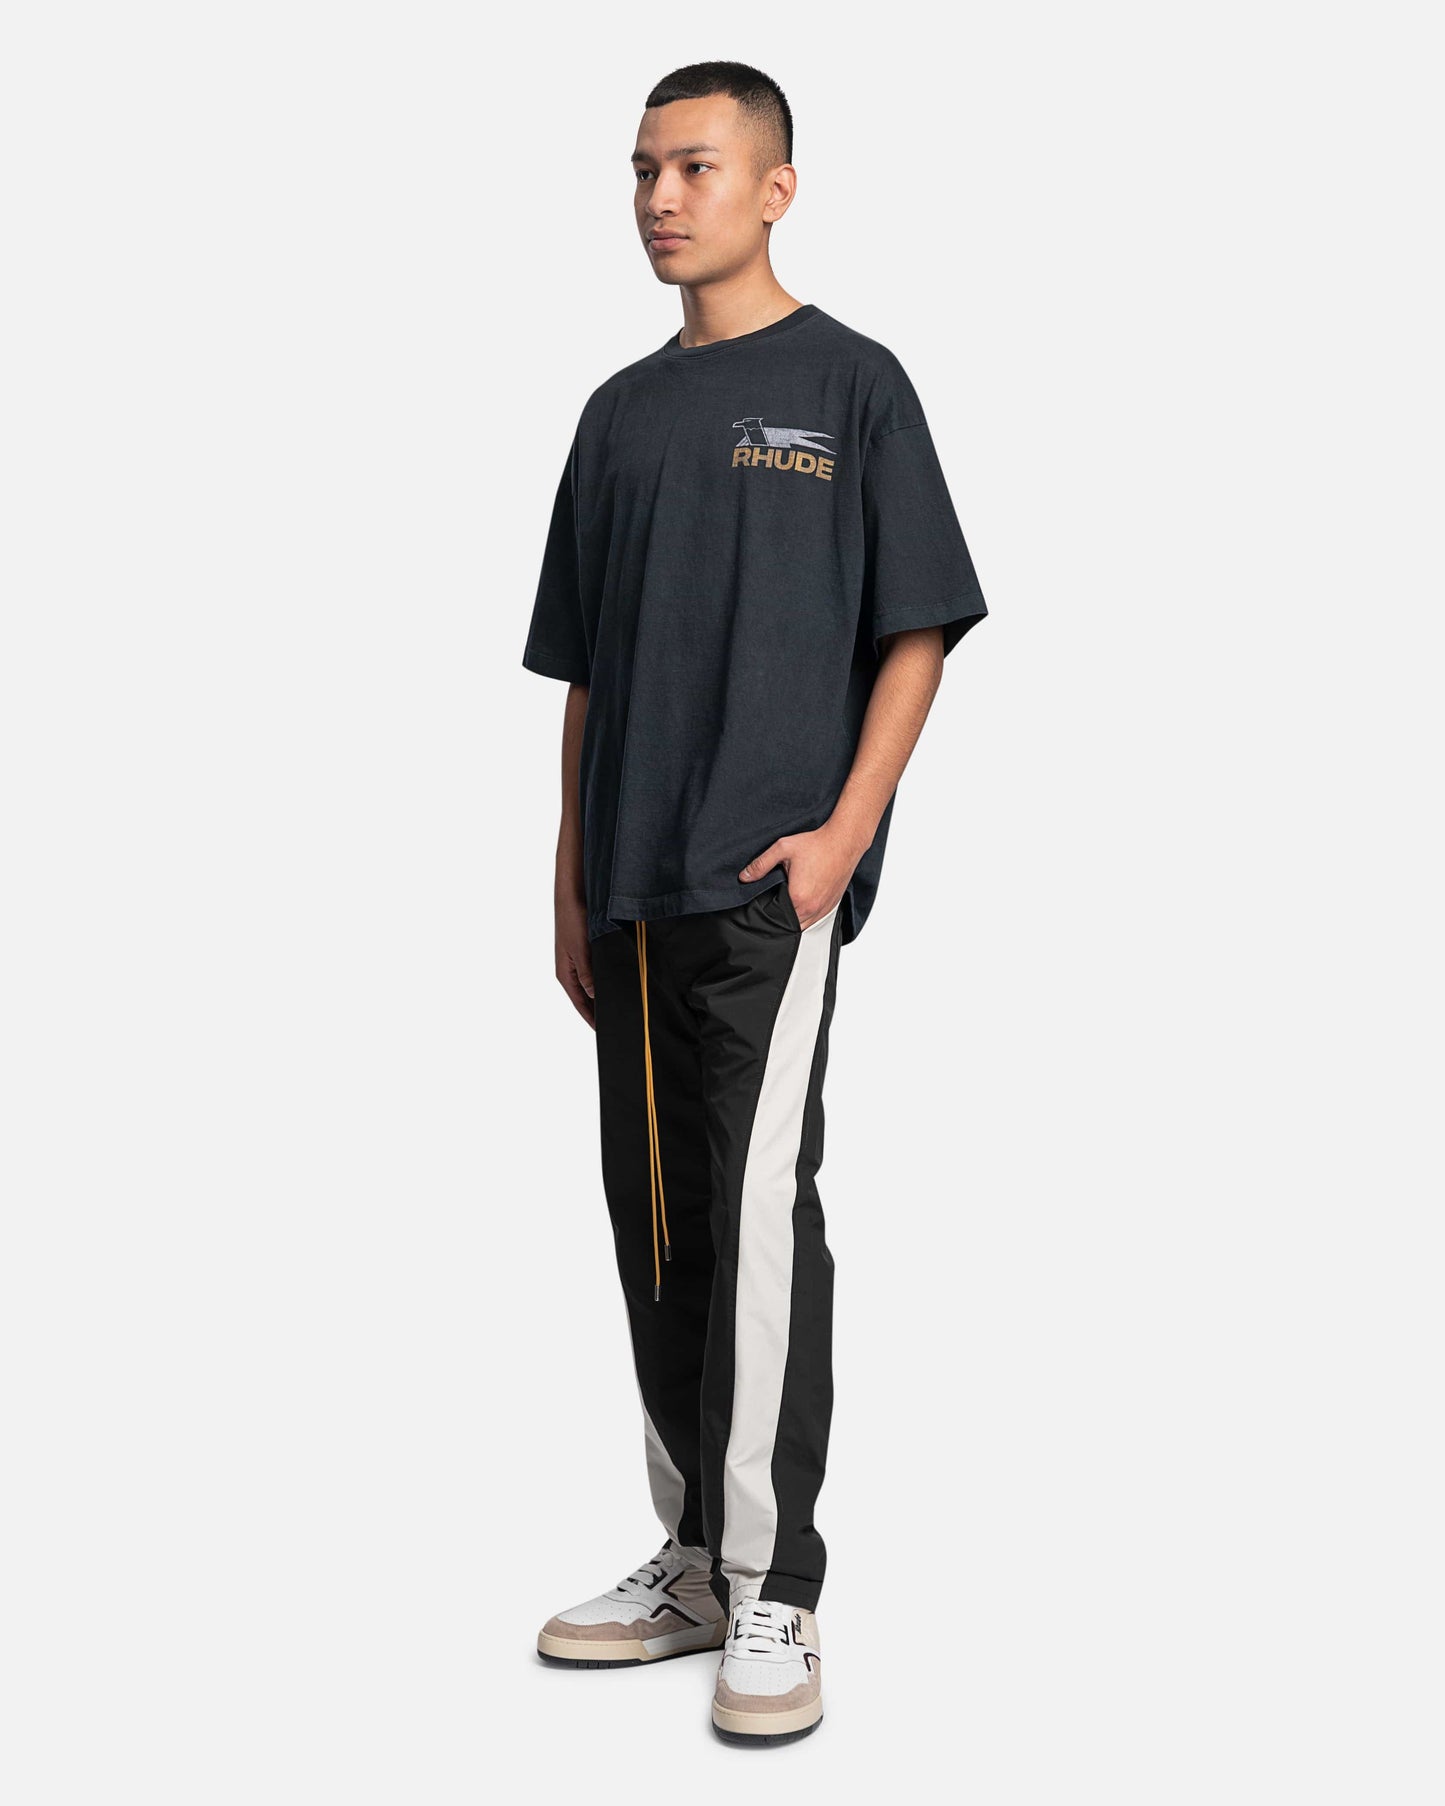 Rhude Men's Pants Curve Panel Track Pant in Black/Creme